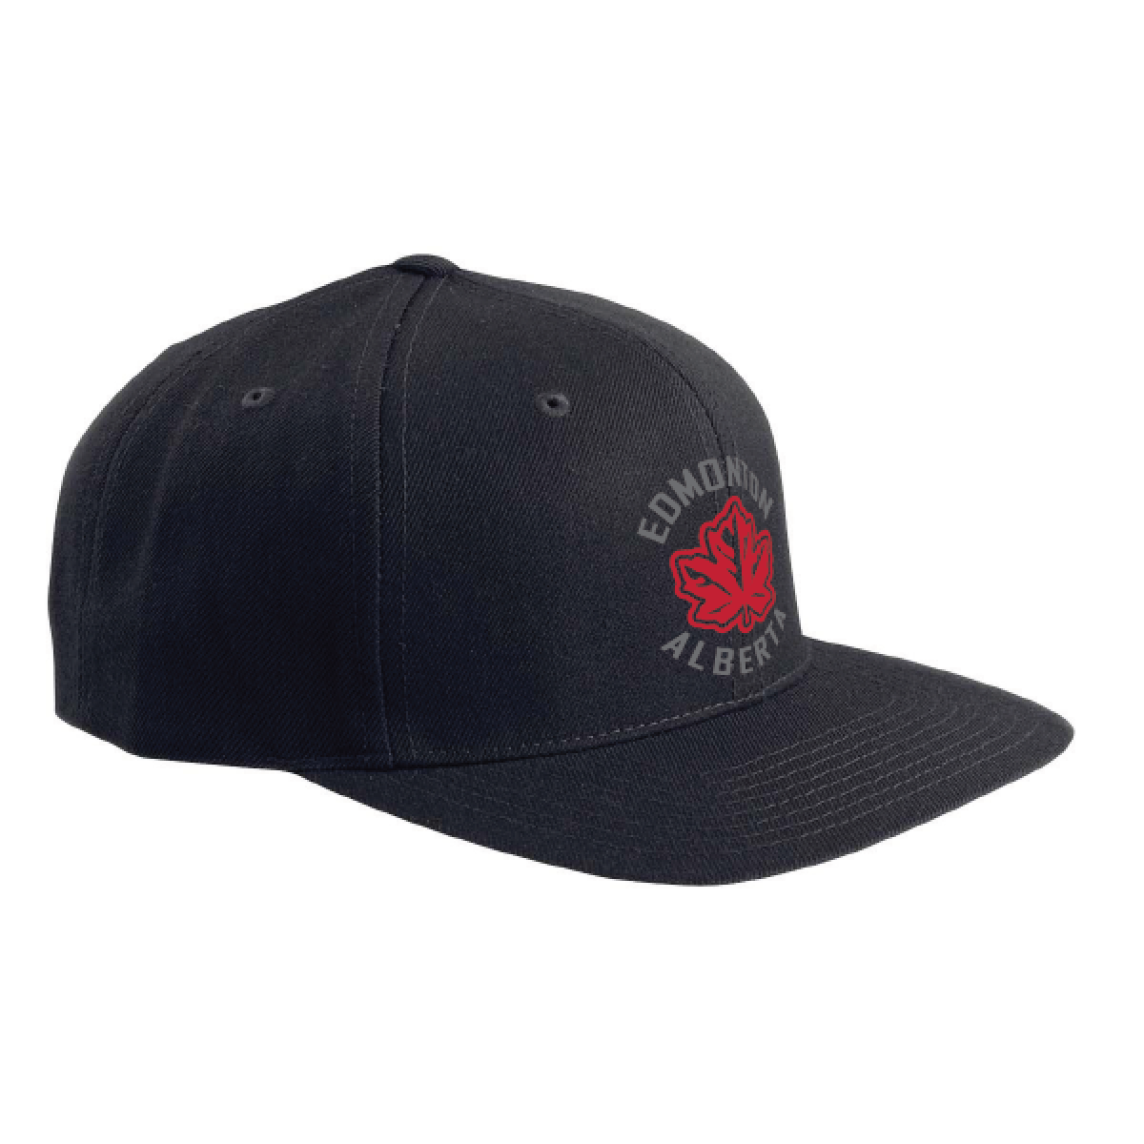 Embroidered OCG Edmonton Maple Leaf Snap Back cap in Black